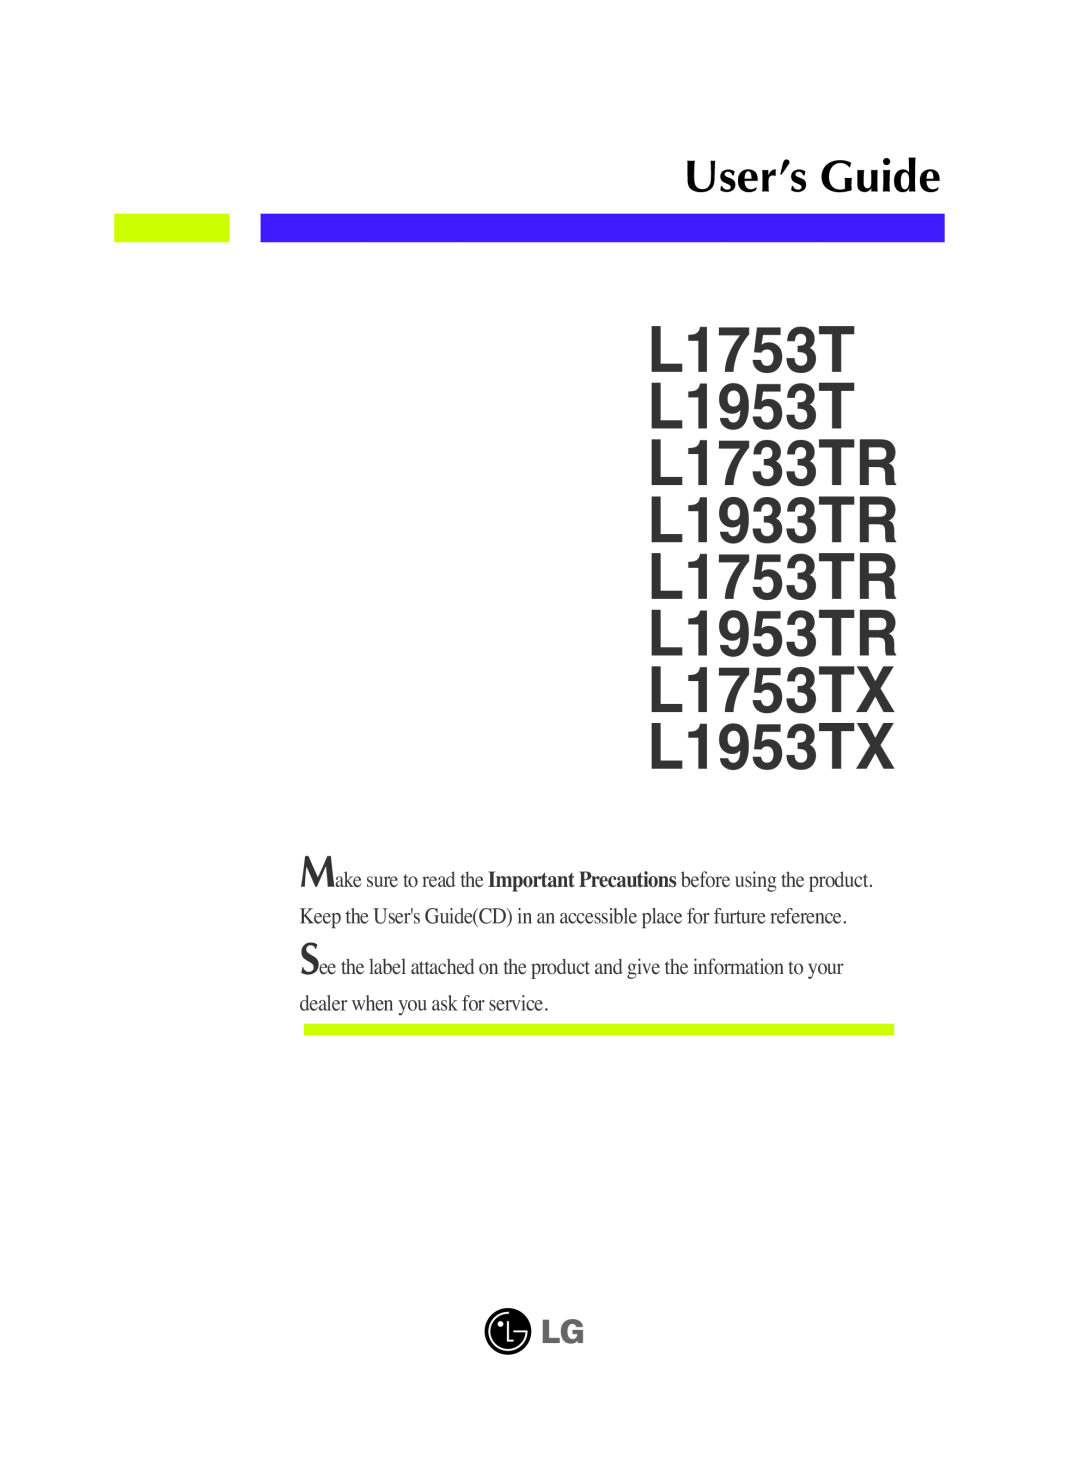 LG Electronics manual L1753T L1953T L1733TR L1933TR L1753TR L1953TR, L1753TX L1953TX, User’s Guide 